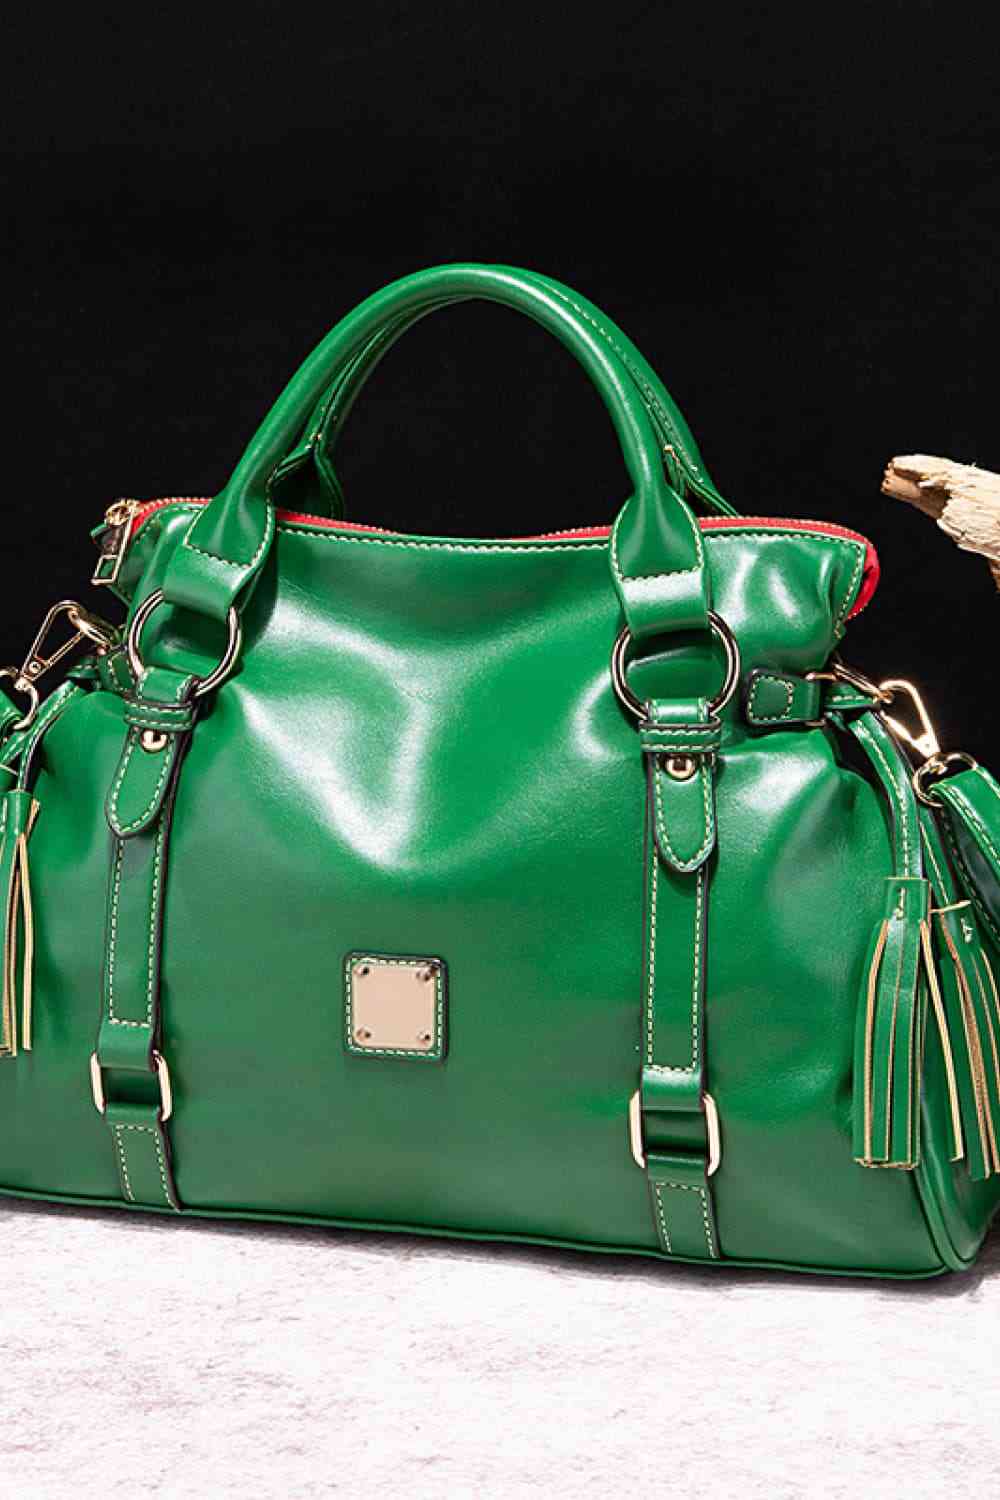 Leather Handbag with Tassels